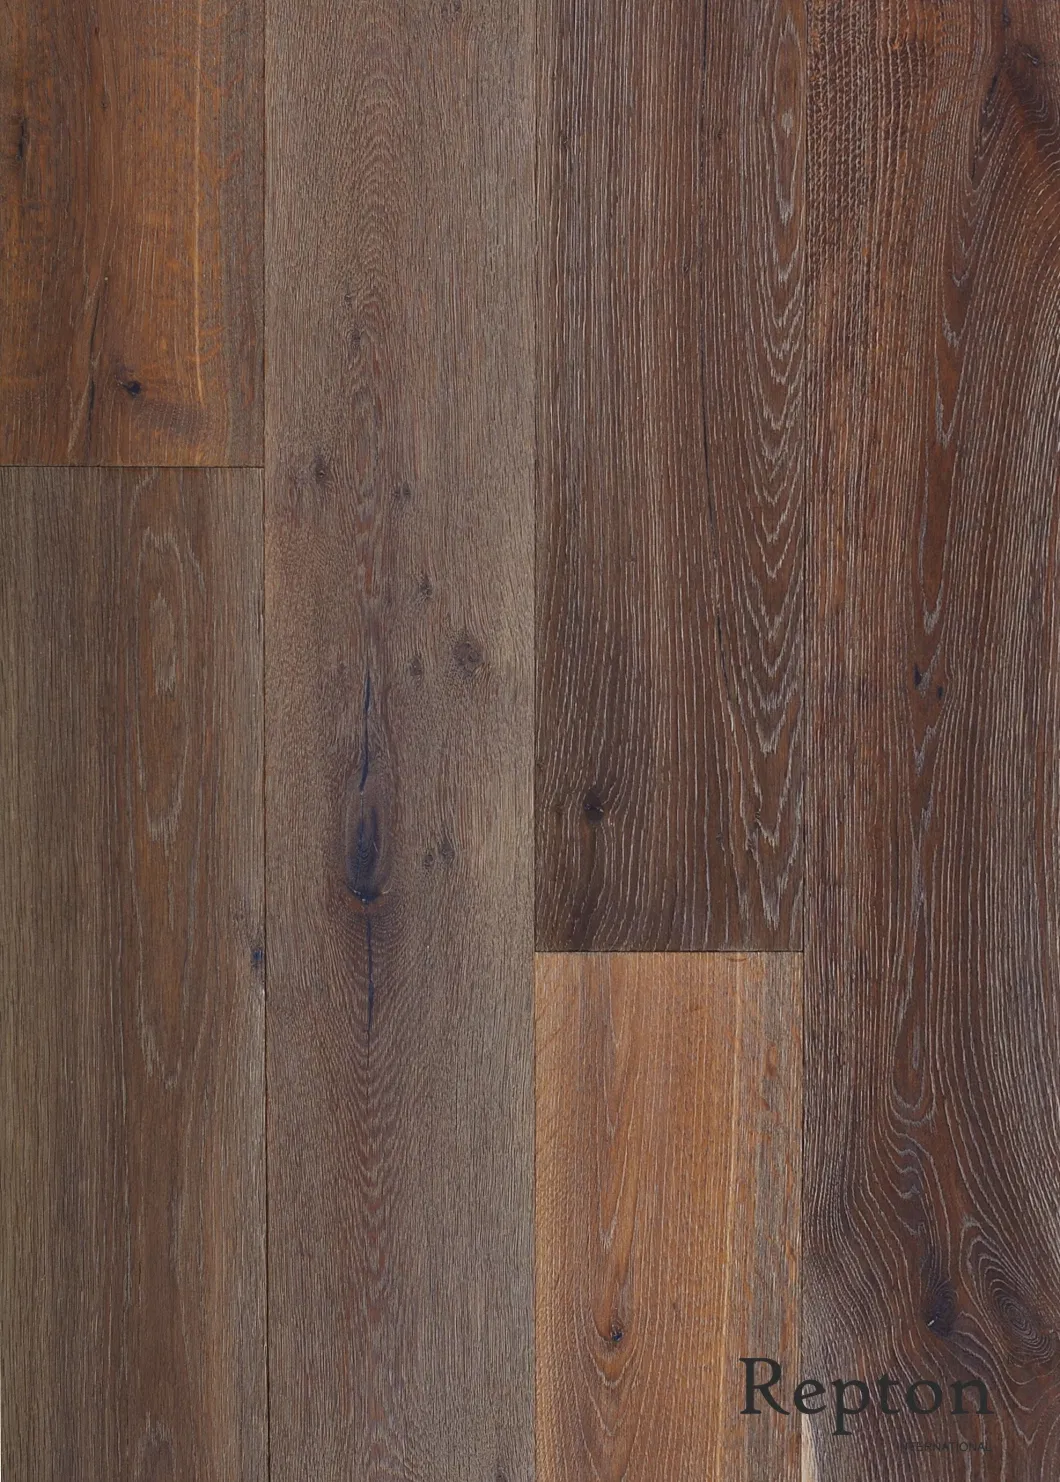 190mm/220mm Wire Brushed Abcd Oak Parquet Laminate Engineered Hardwood Wood Flooring